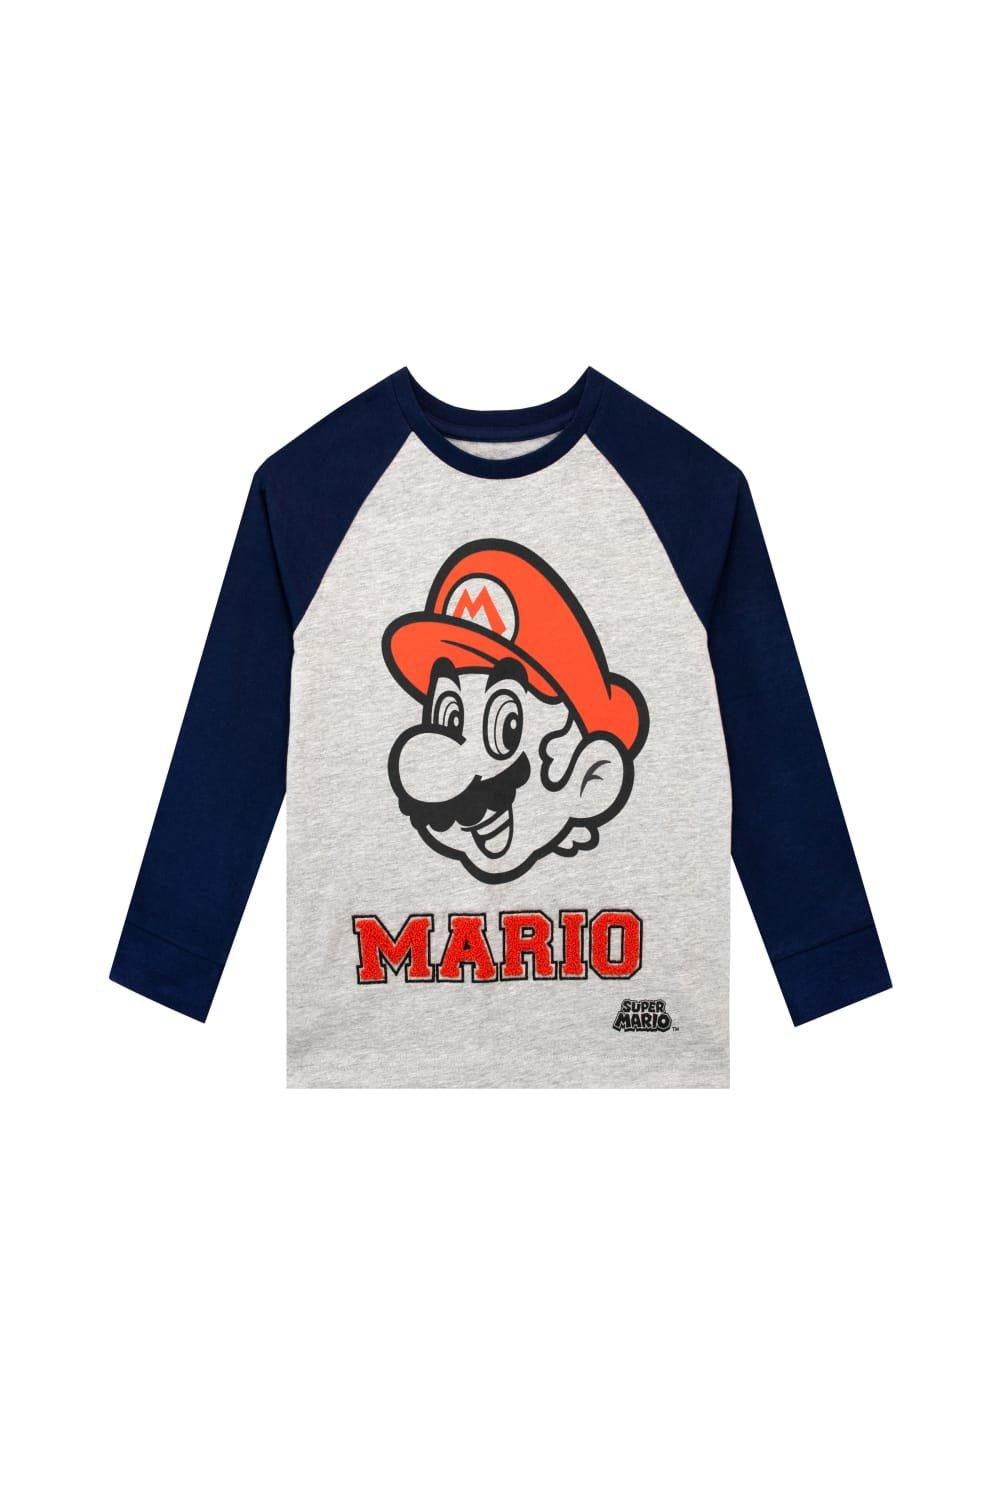 Топ с длинными рукавами Mushroom Kingdom Mario Gaming Super Mario, серый